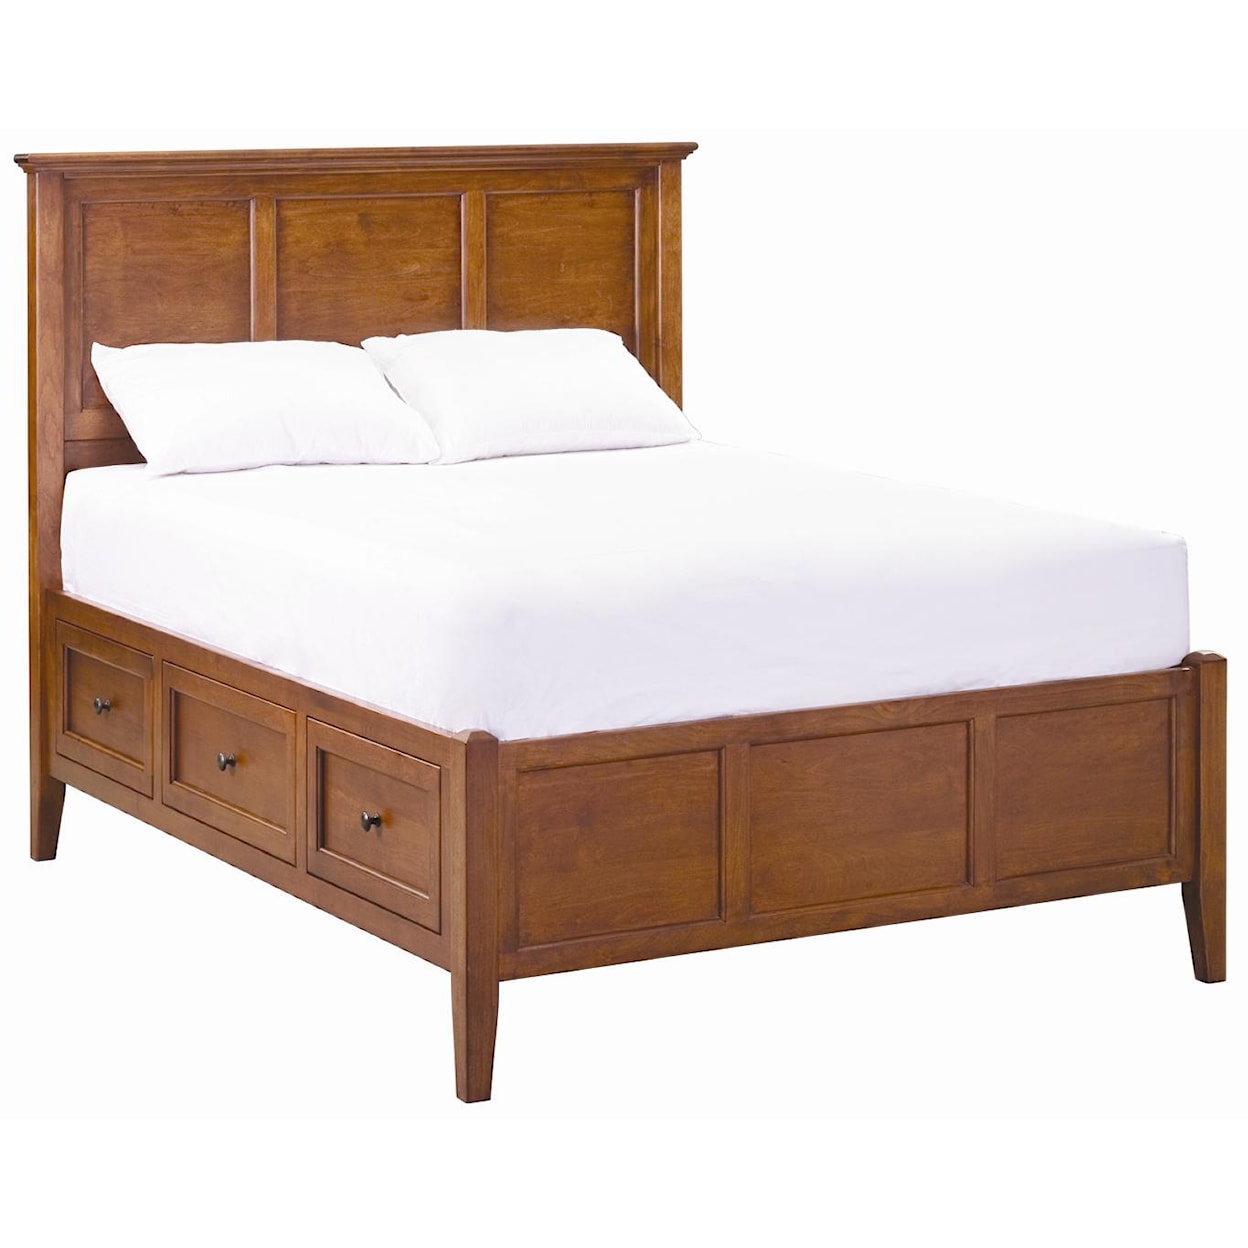 Whittier Wood   Full Storage Bed